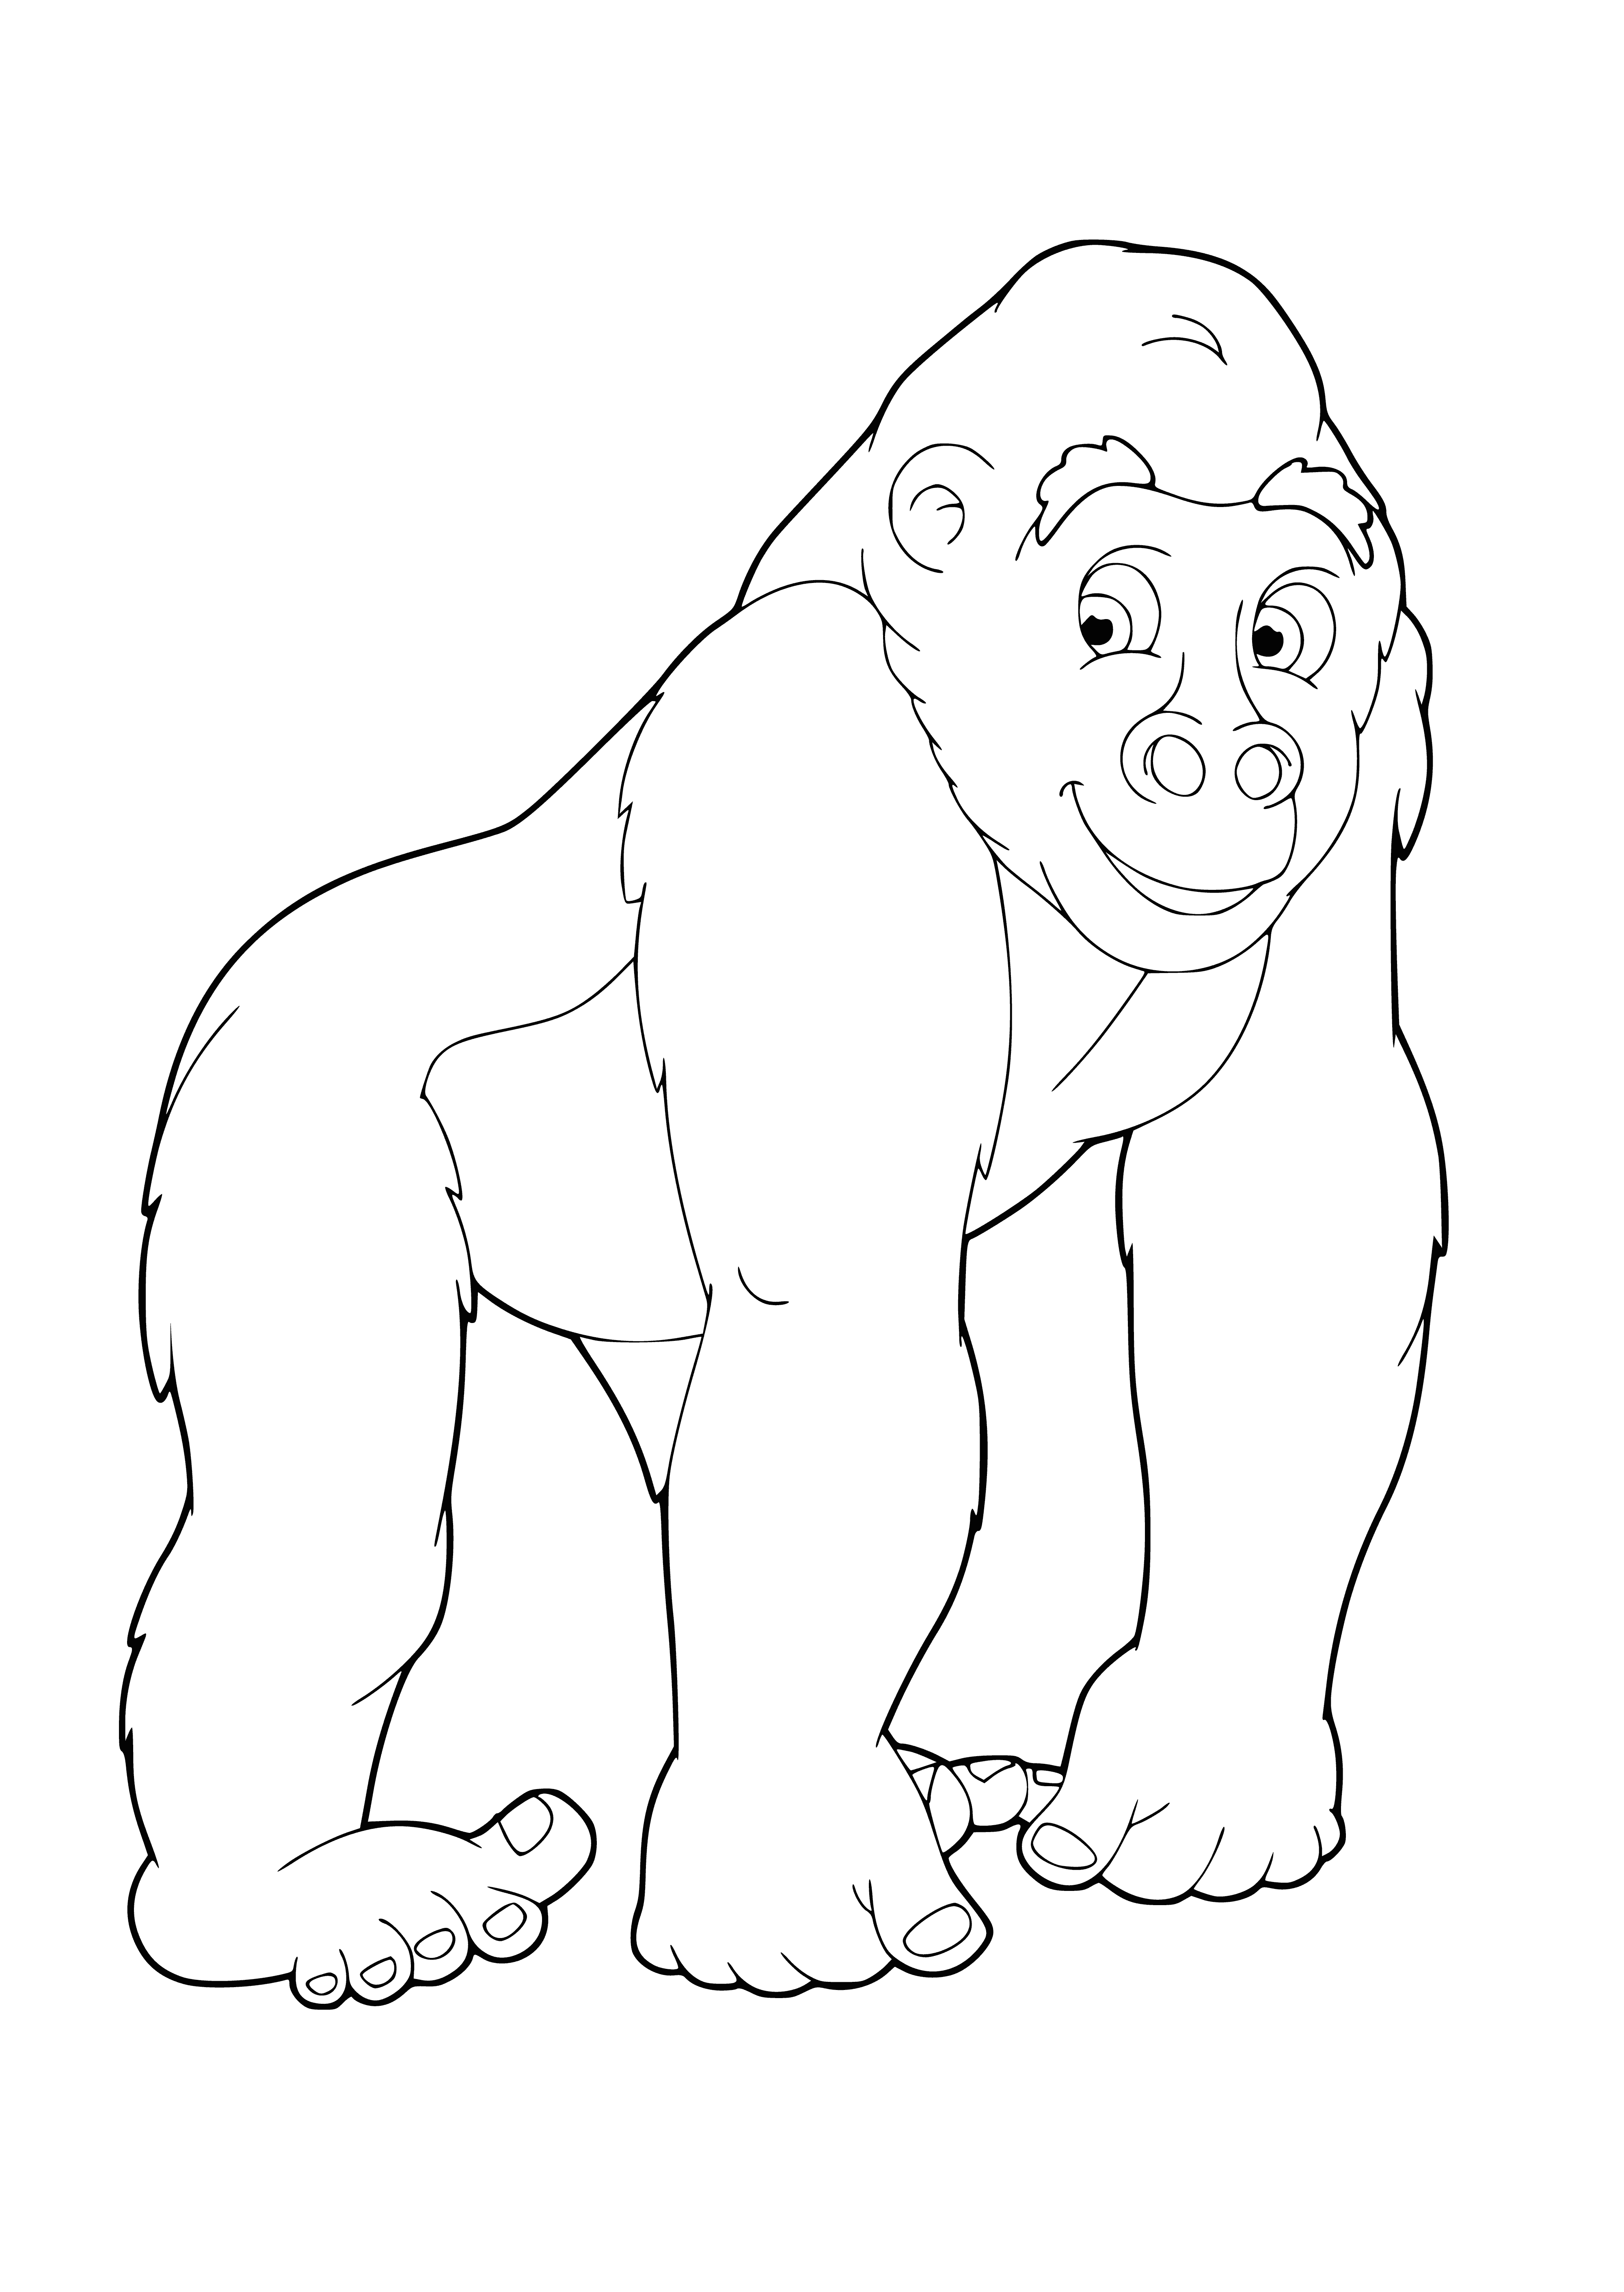 Big monkey coloring page